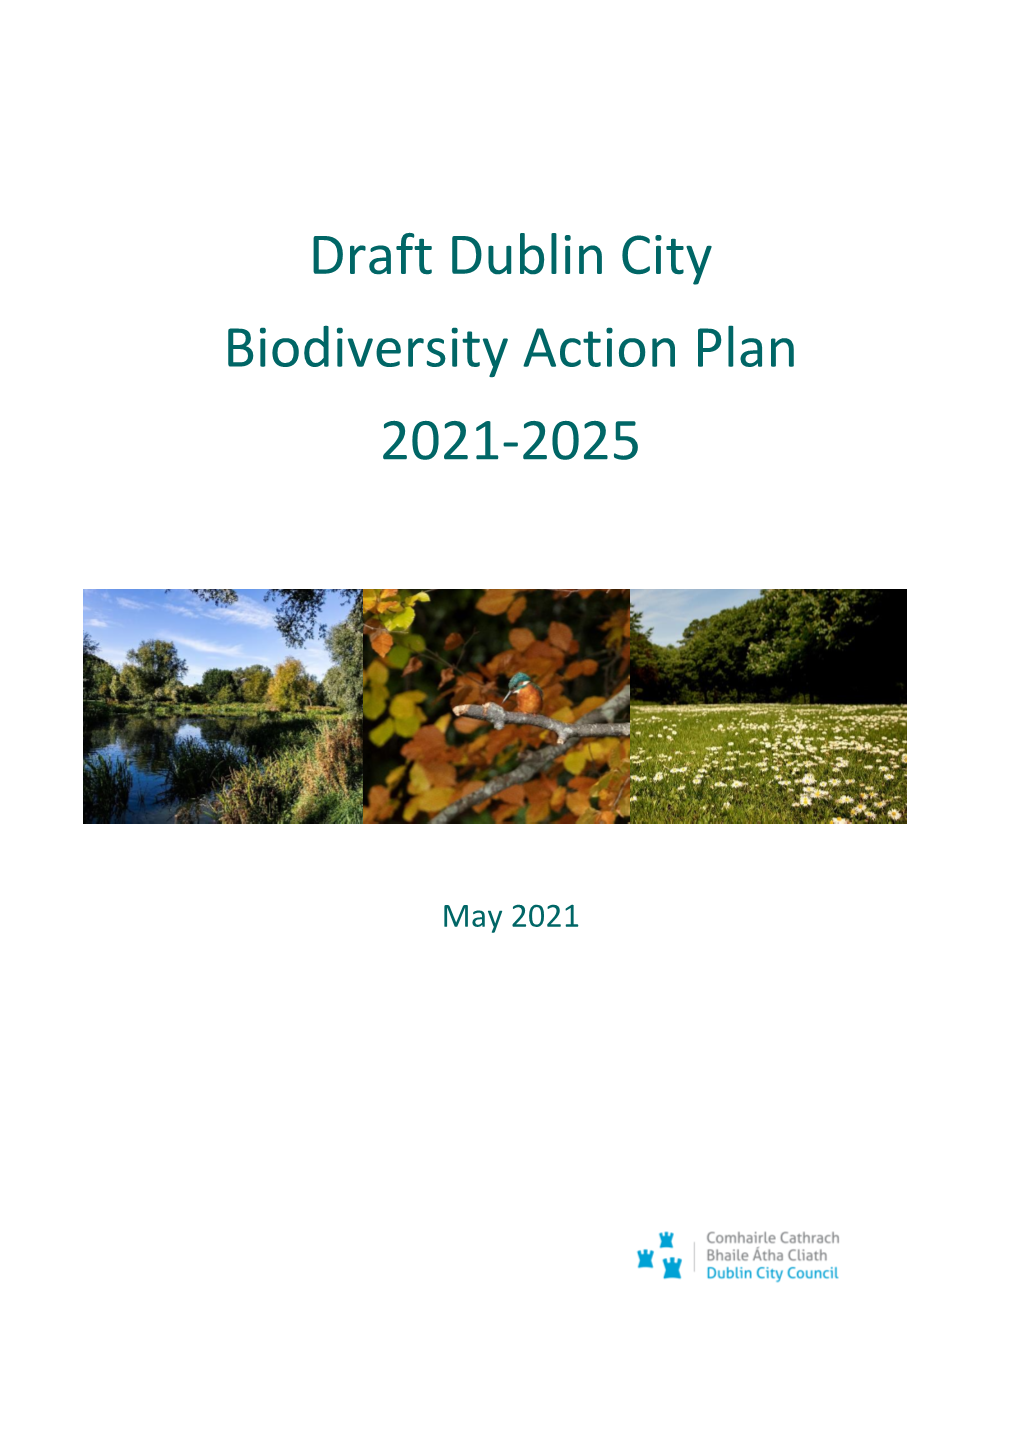 Draft Dublin City Biodiversity Action Plan 2021-2025